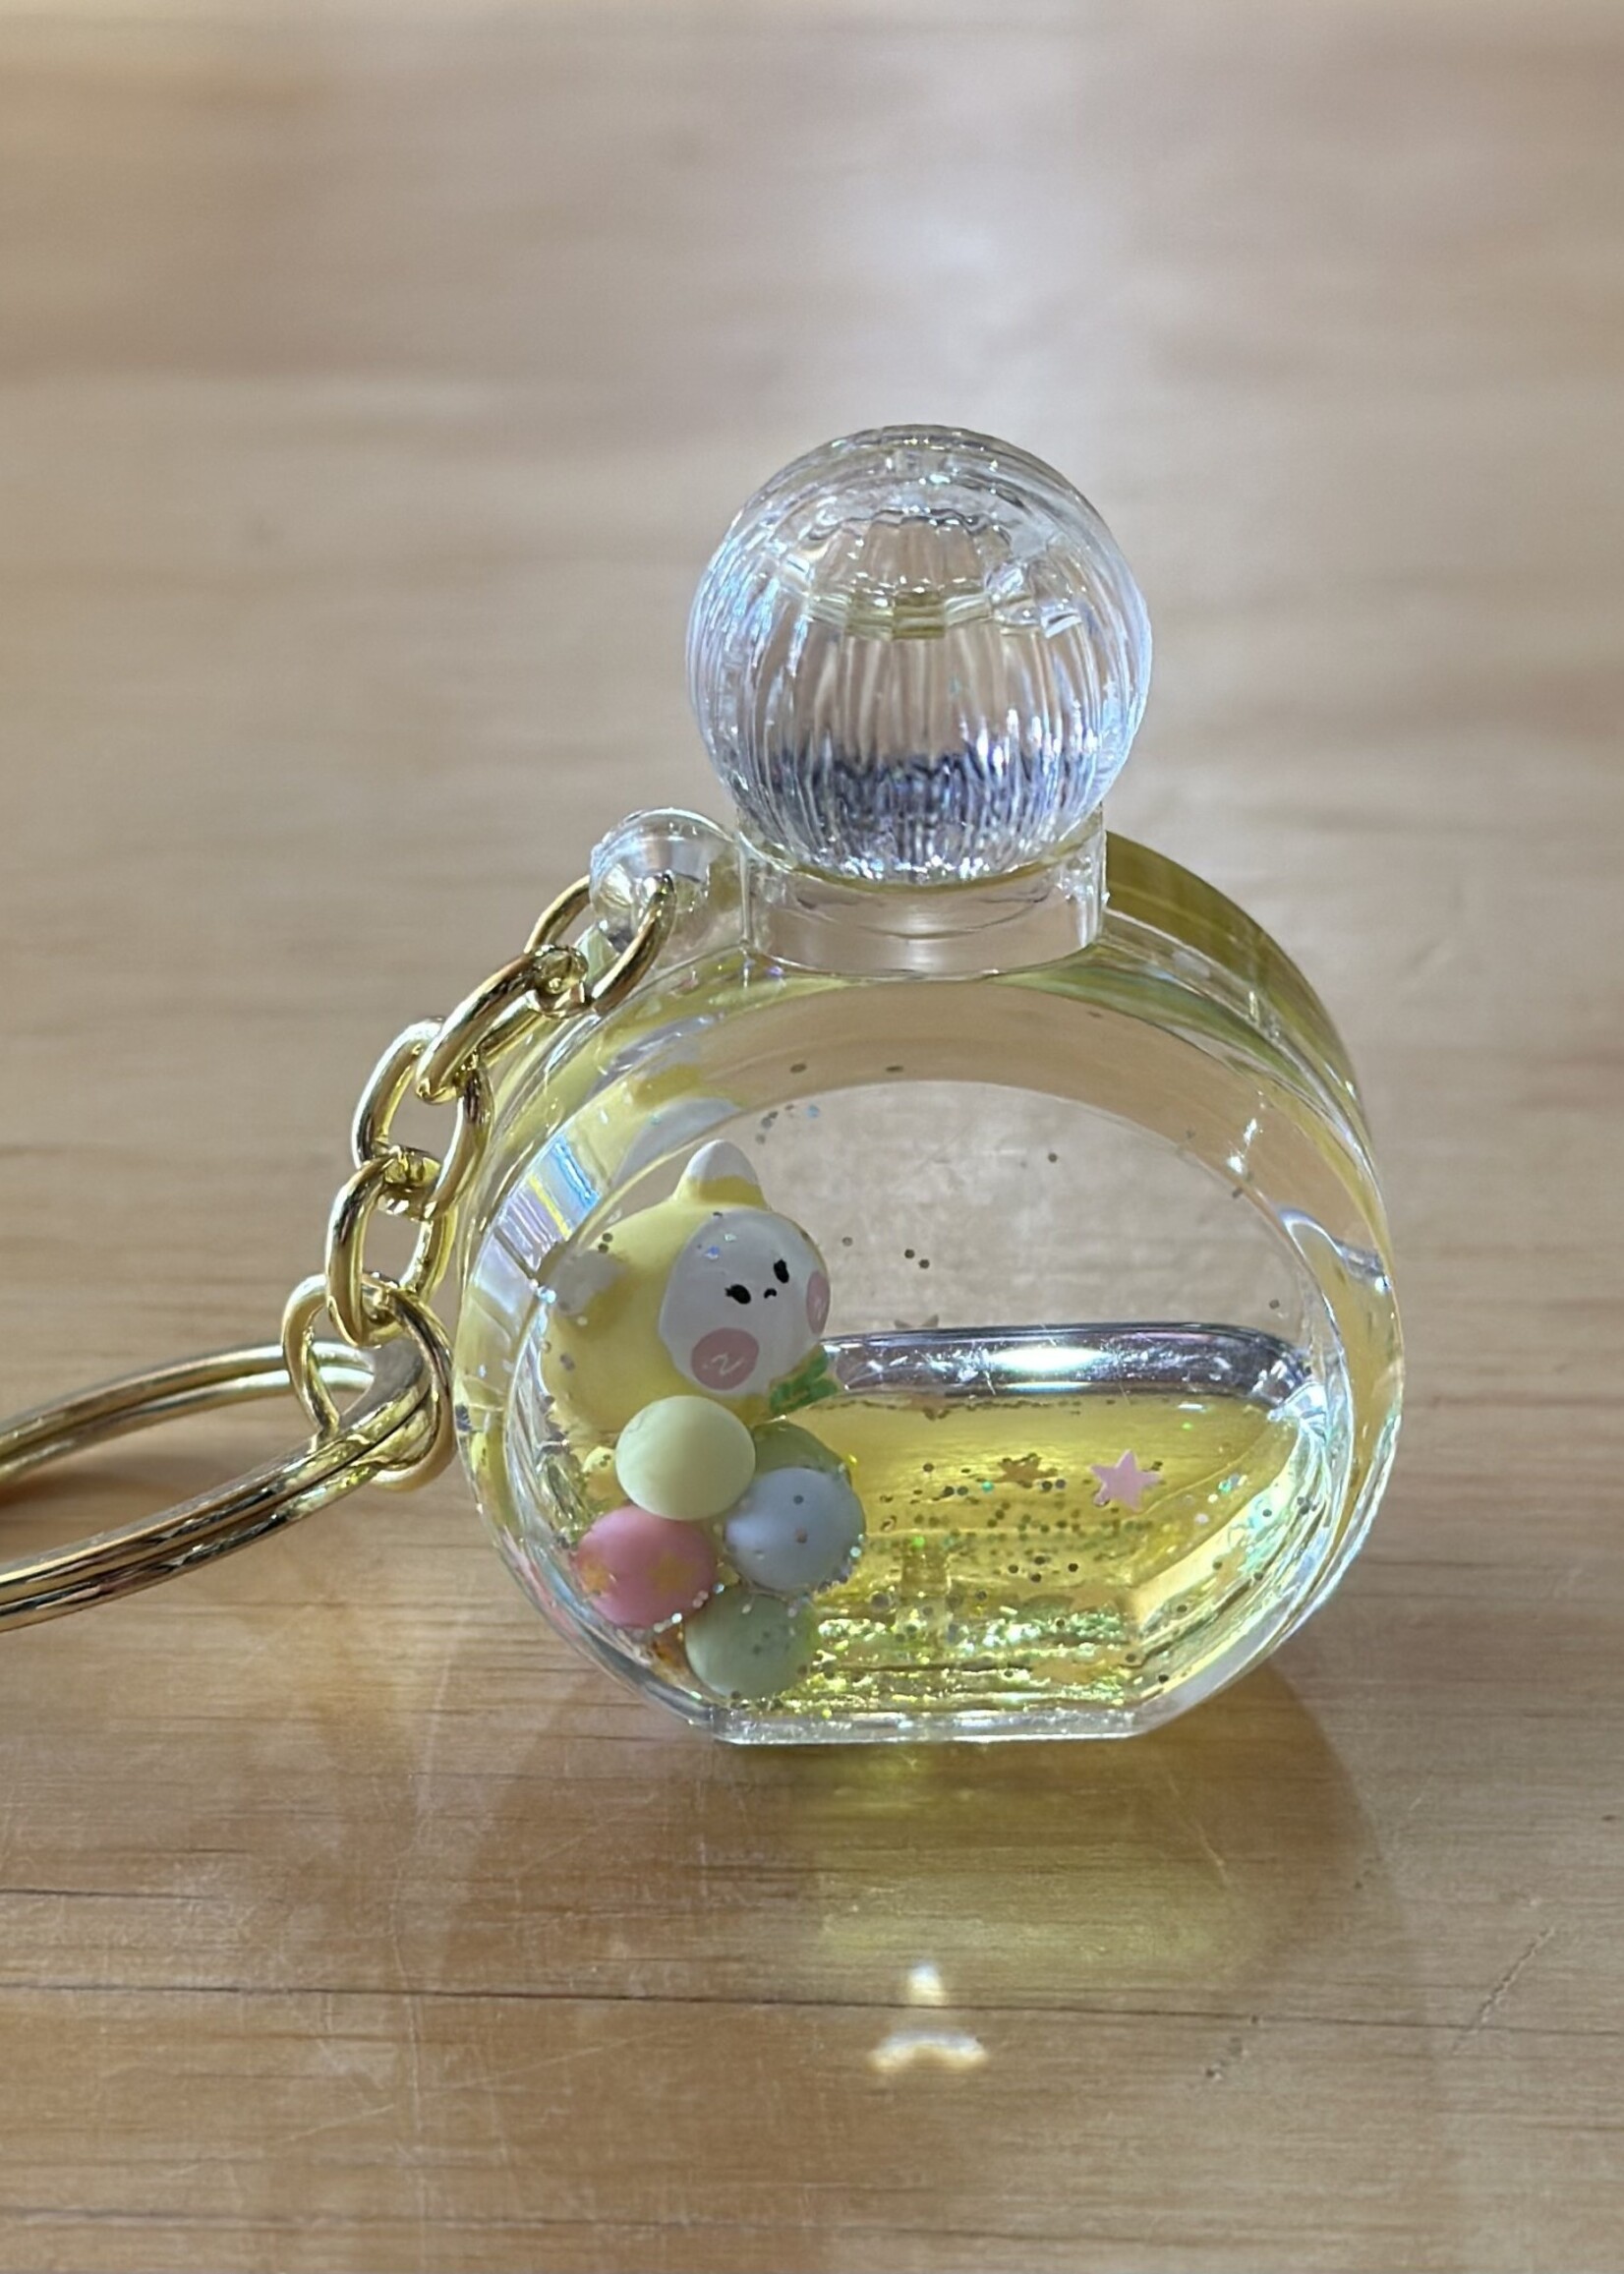 Kitty Perfume Bottle Floaty Keycharm